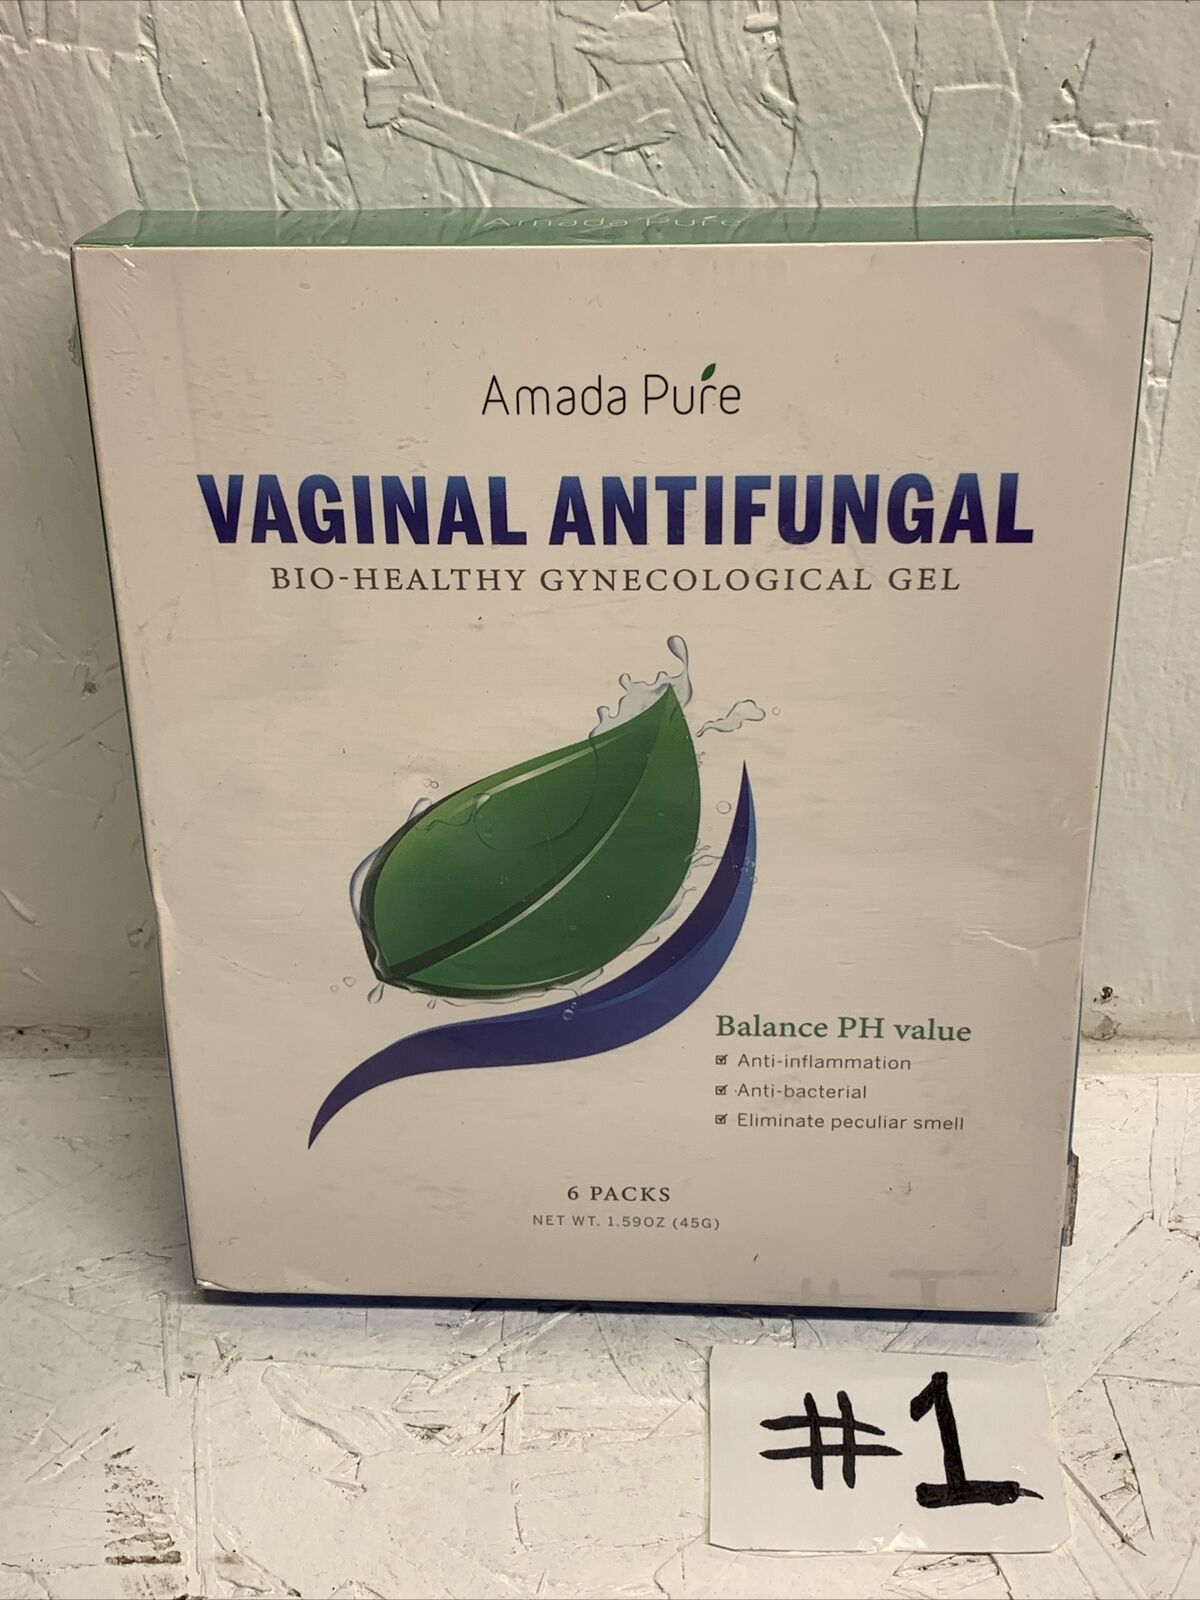 Amada Pure Vaginal Antifungal Gel 6pks Exp.10/14/21